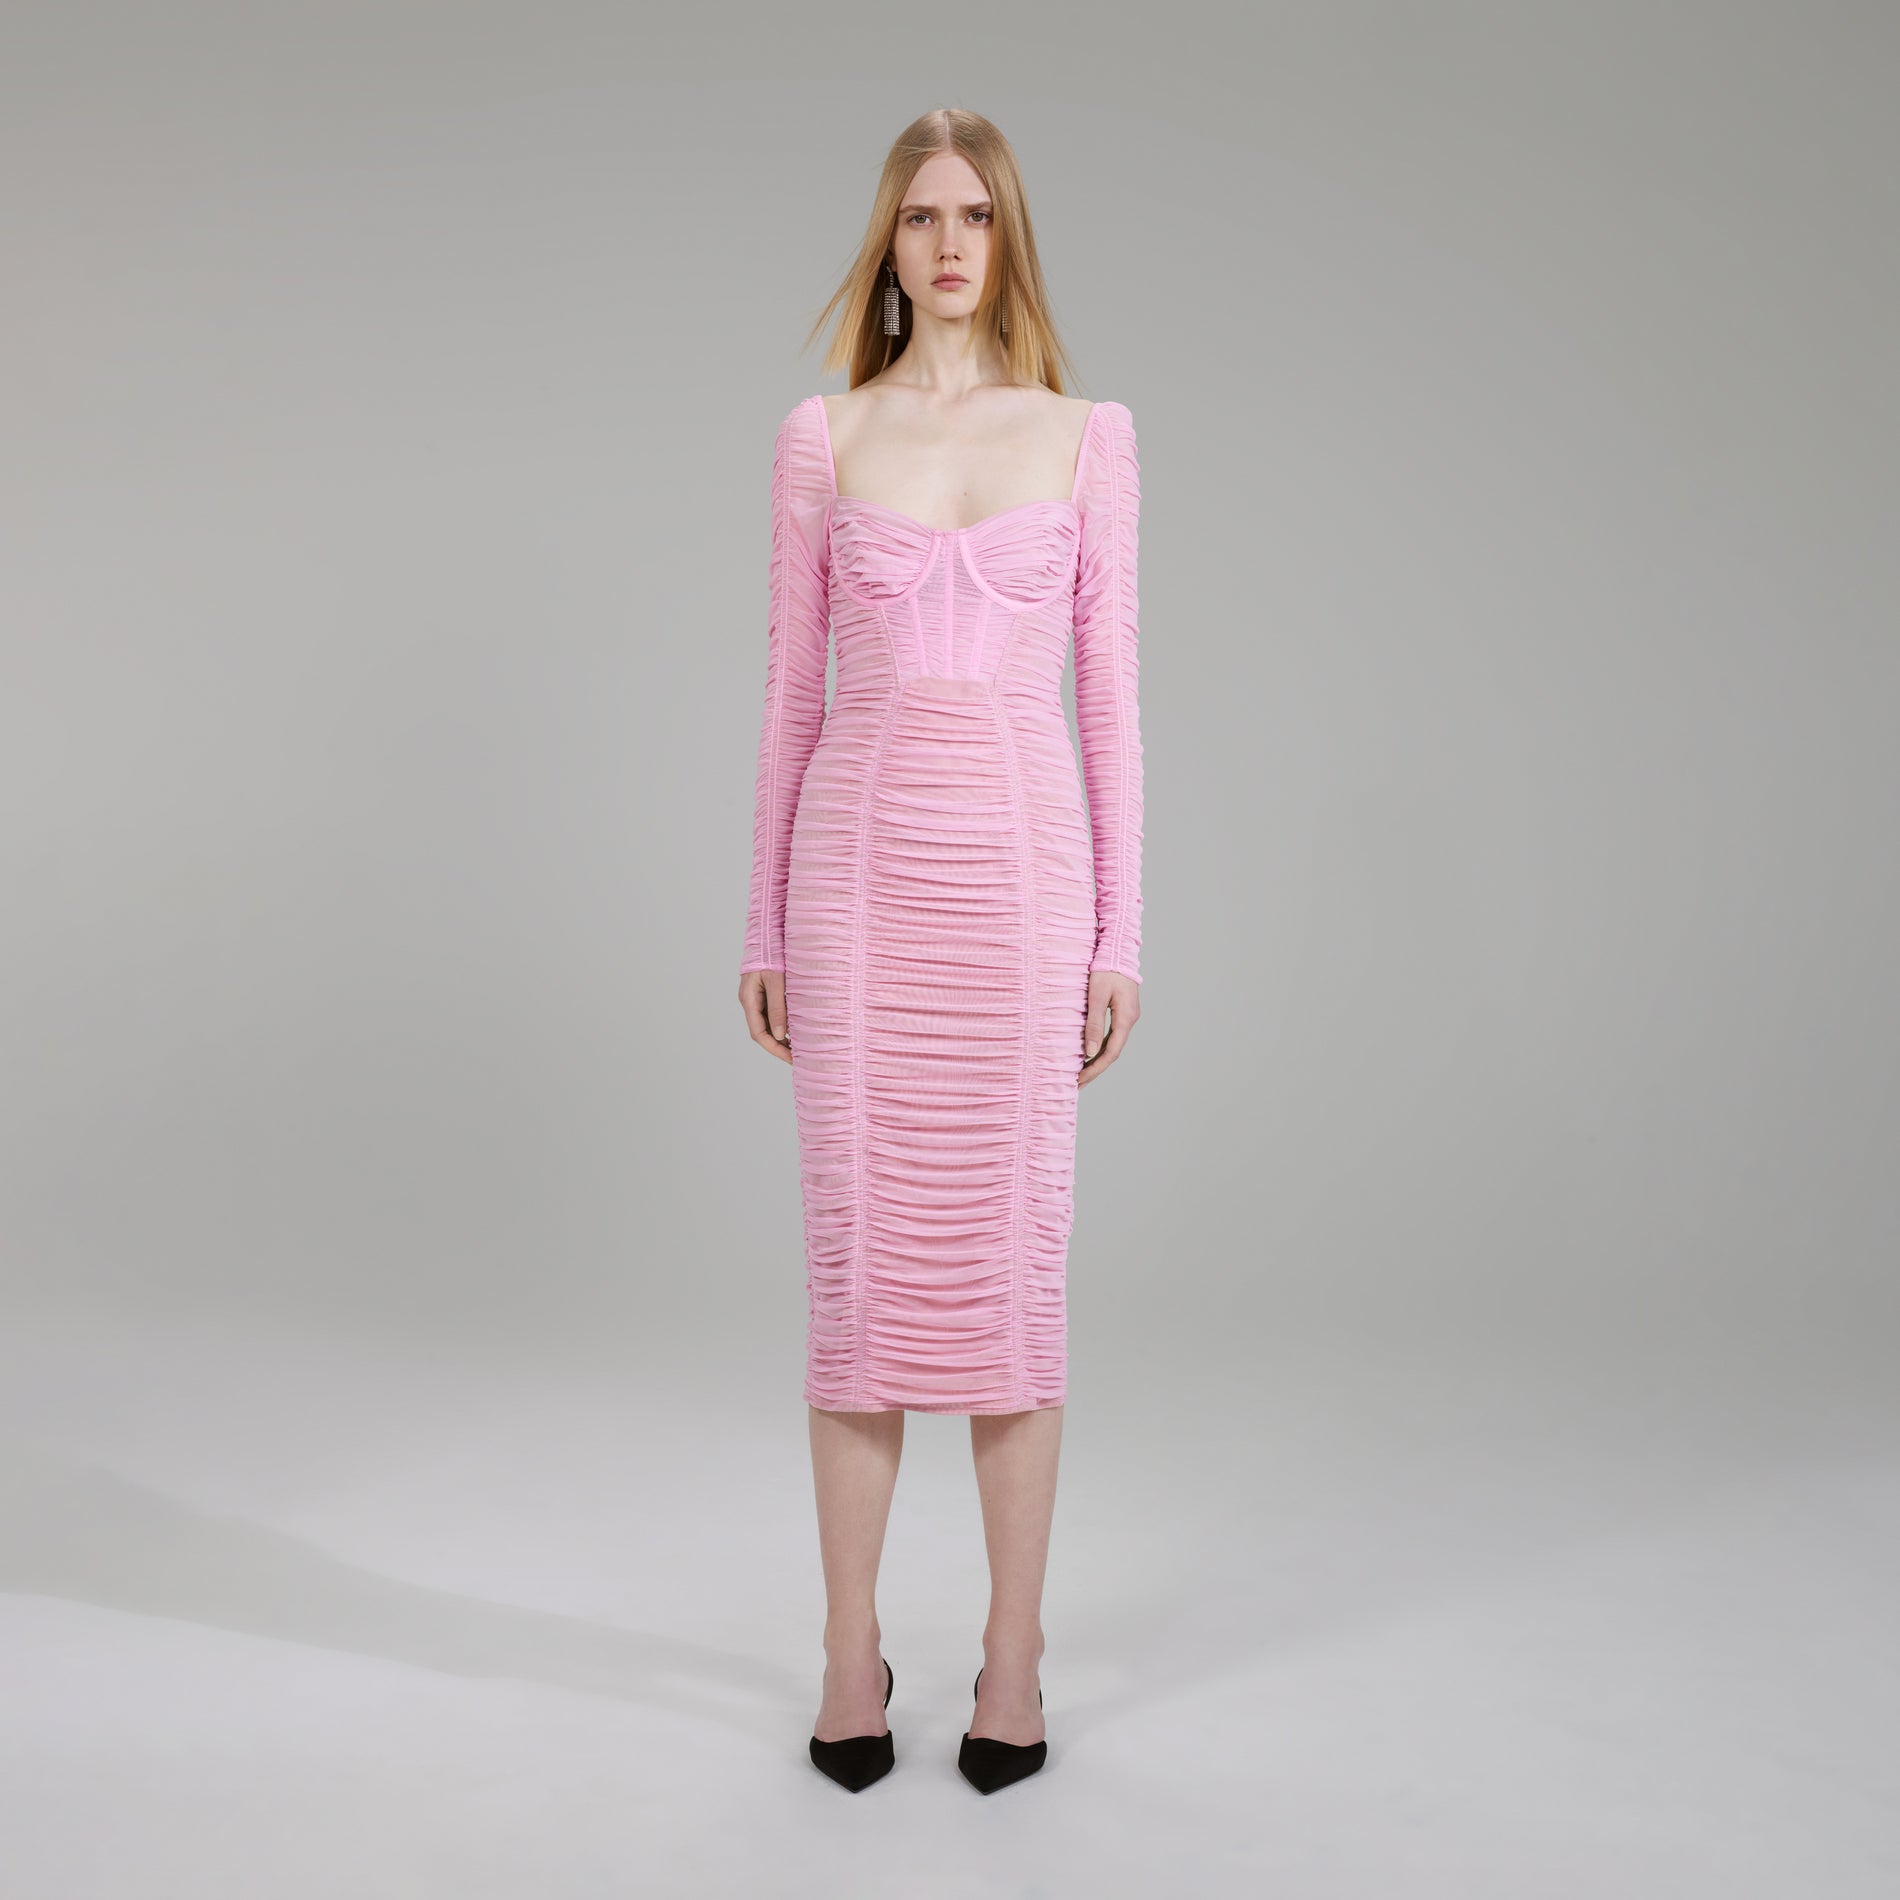 A woman wearing the Pink Power Mesh Long Sleeve Midi Dress